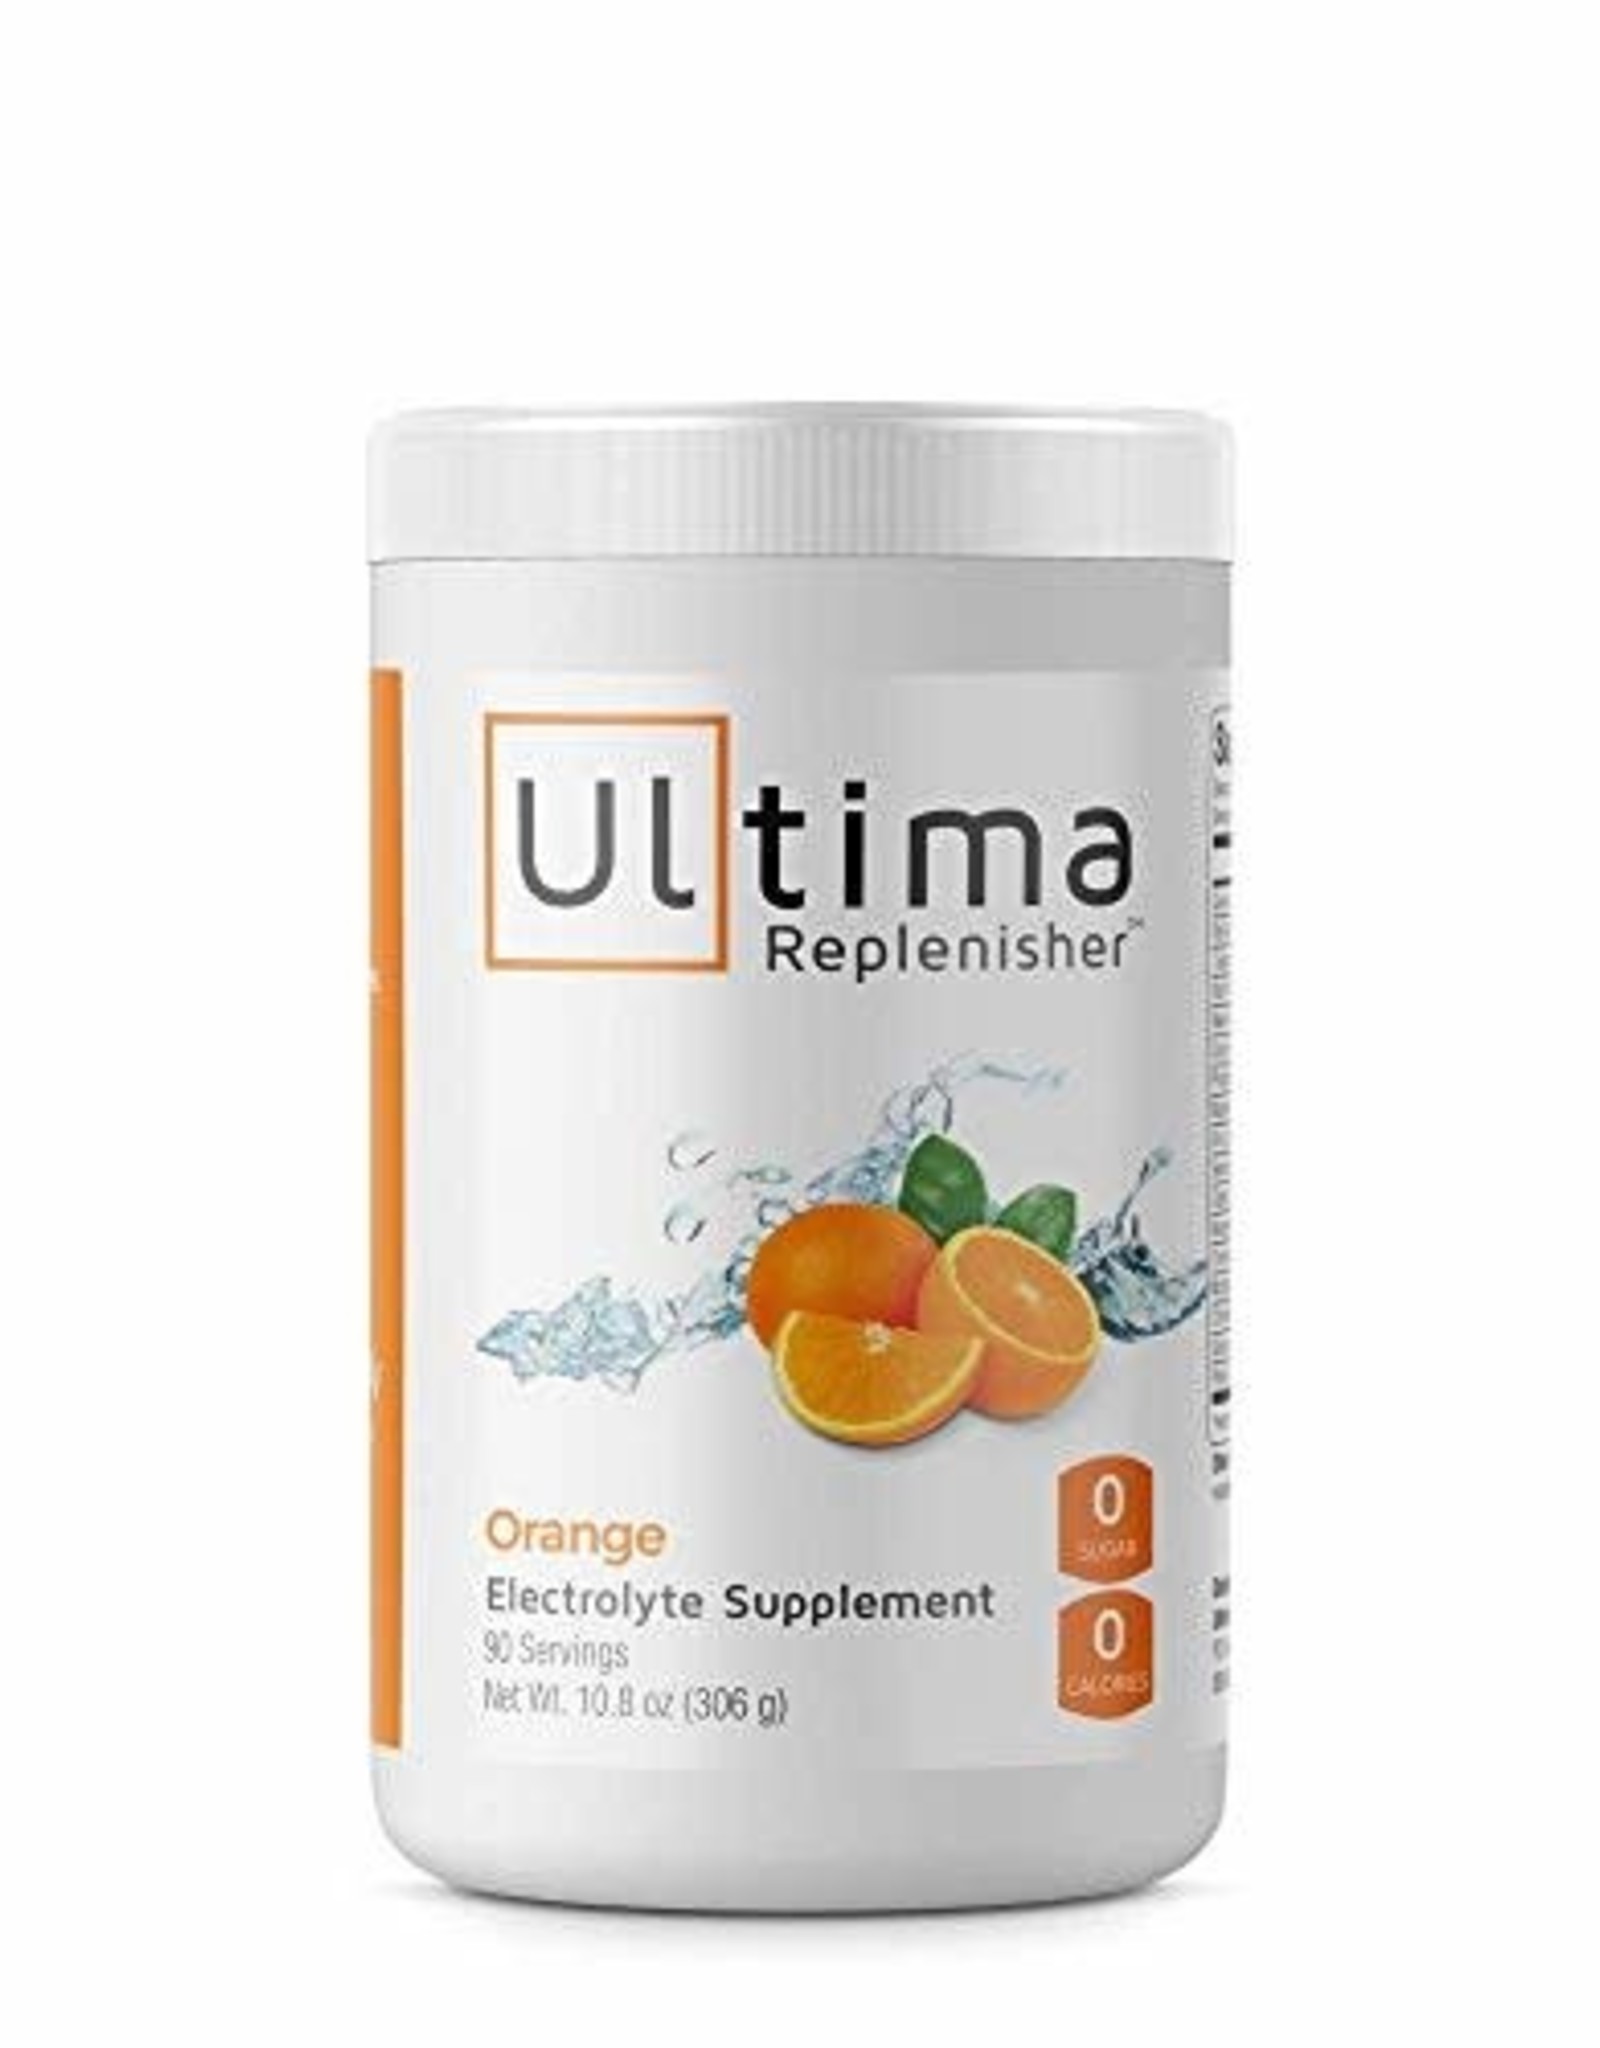 Ultima Ultima Orange Tub large 90 servings